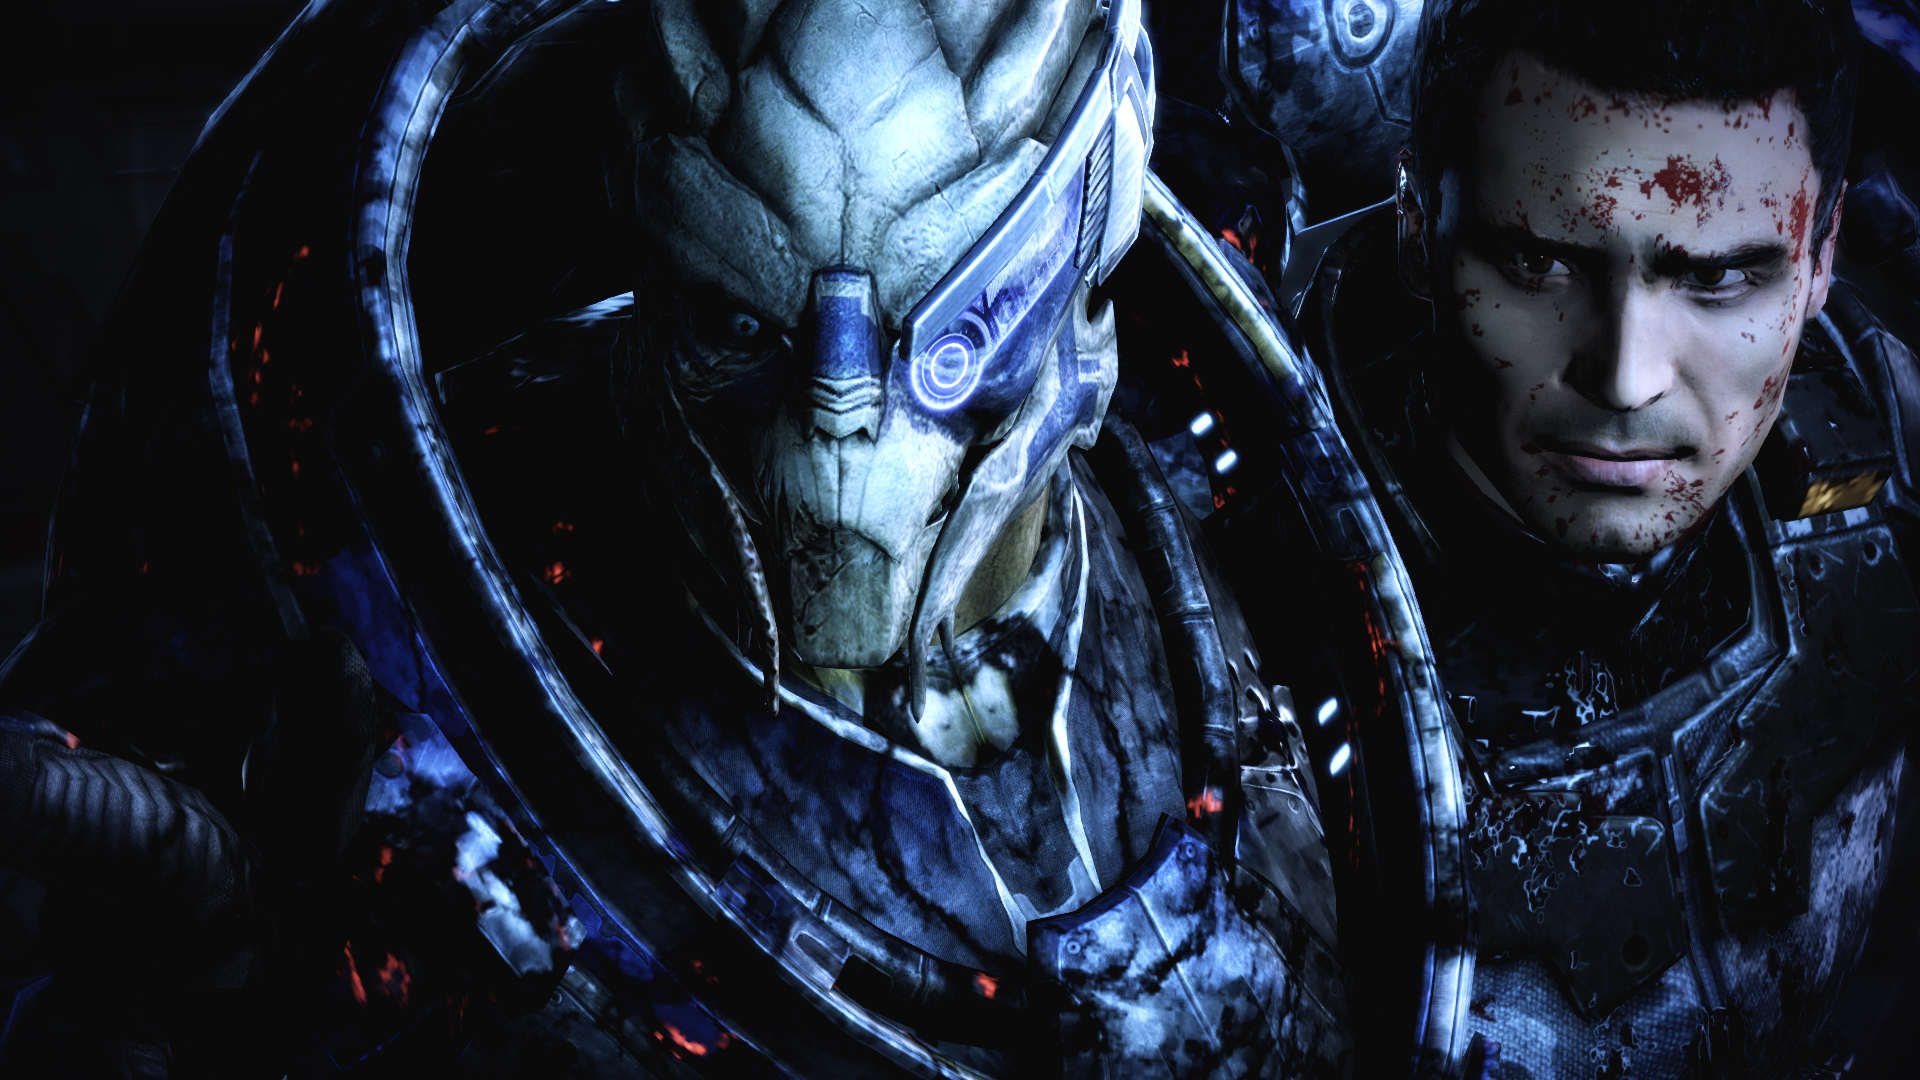 Descarga gratis la imagen Mass Effect, Videojuego, Mass Effect 3, Garrus Vakarian en el escritorio de tu PC